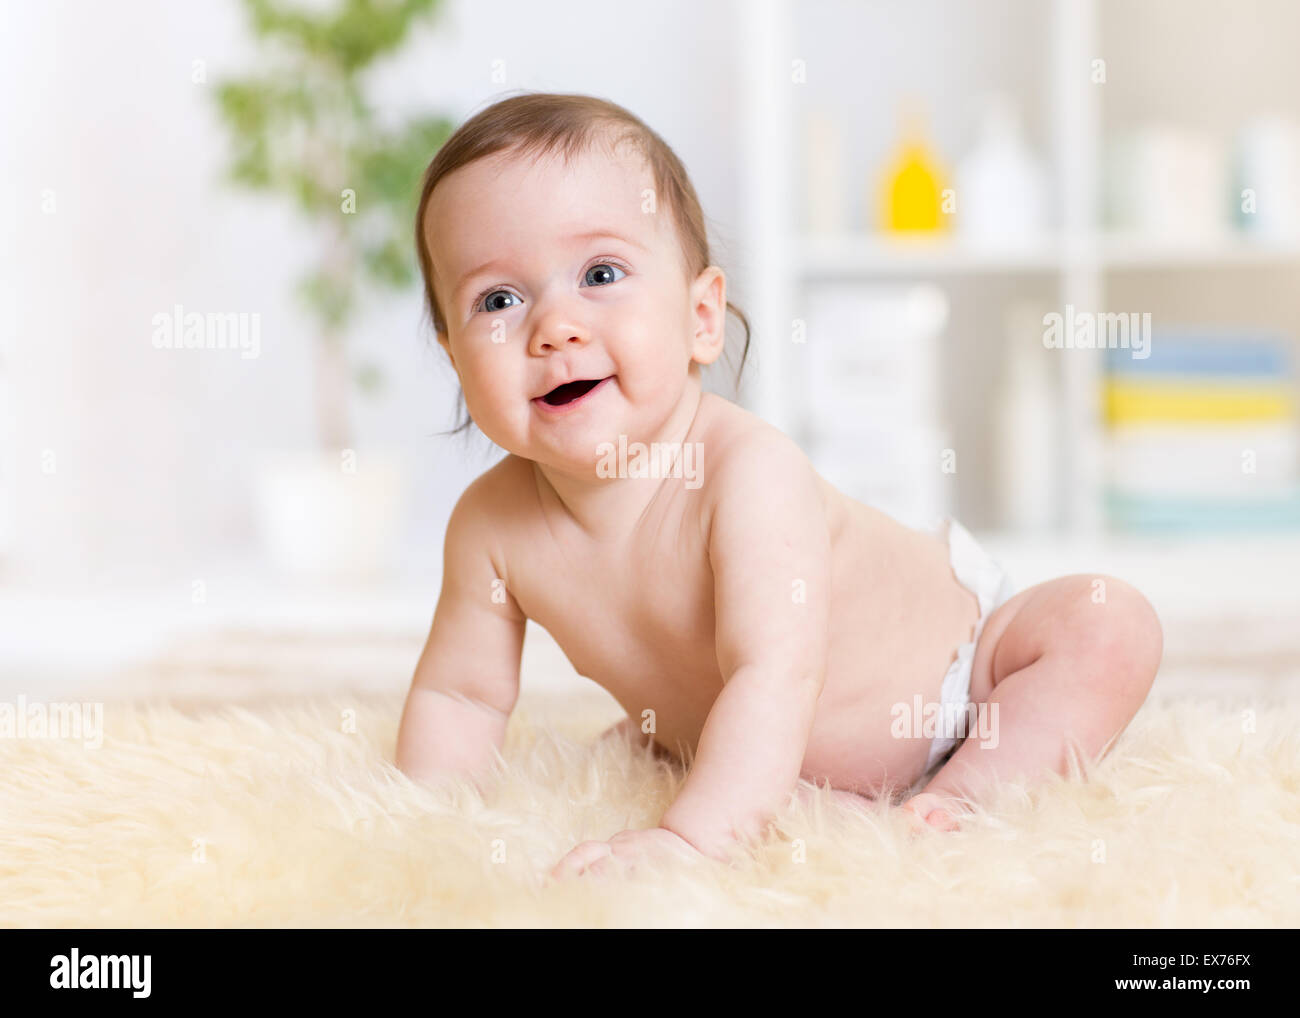 Gattona baby pannolino usurata Foto Stock